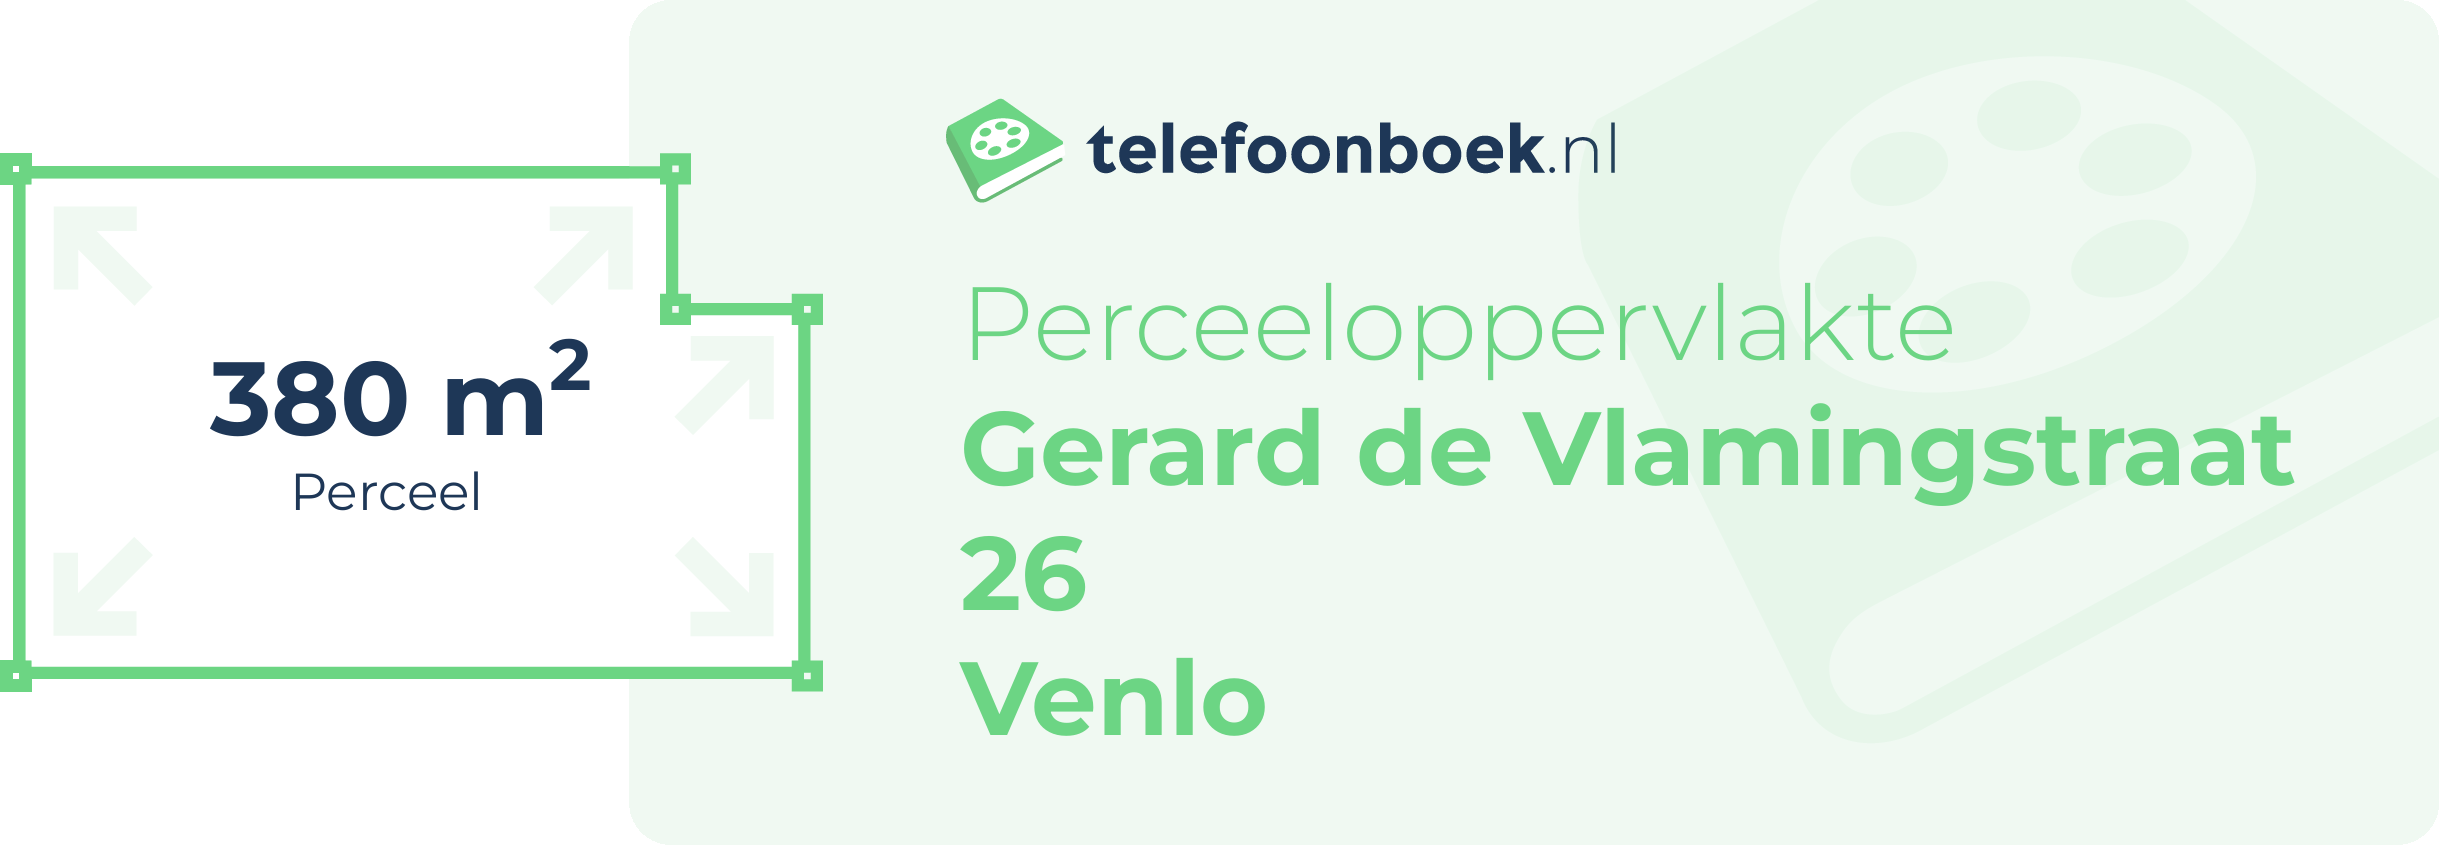 Perceeloppervlakte Gerard De Vlamingstraat 26 Venlo